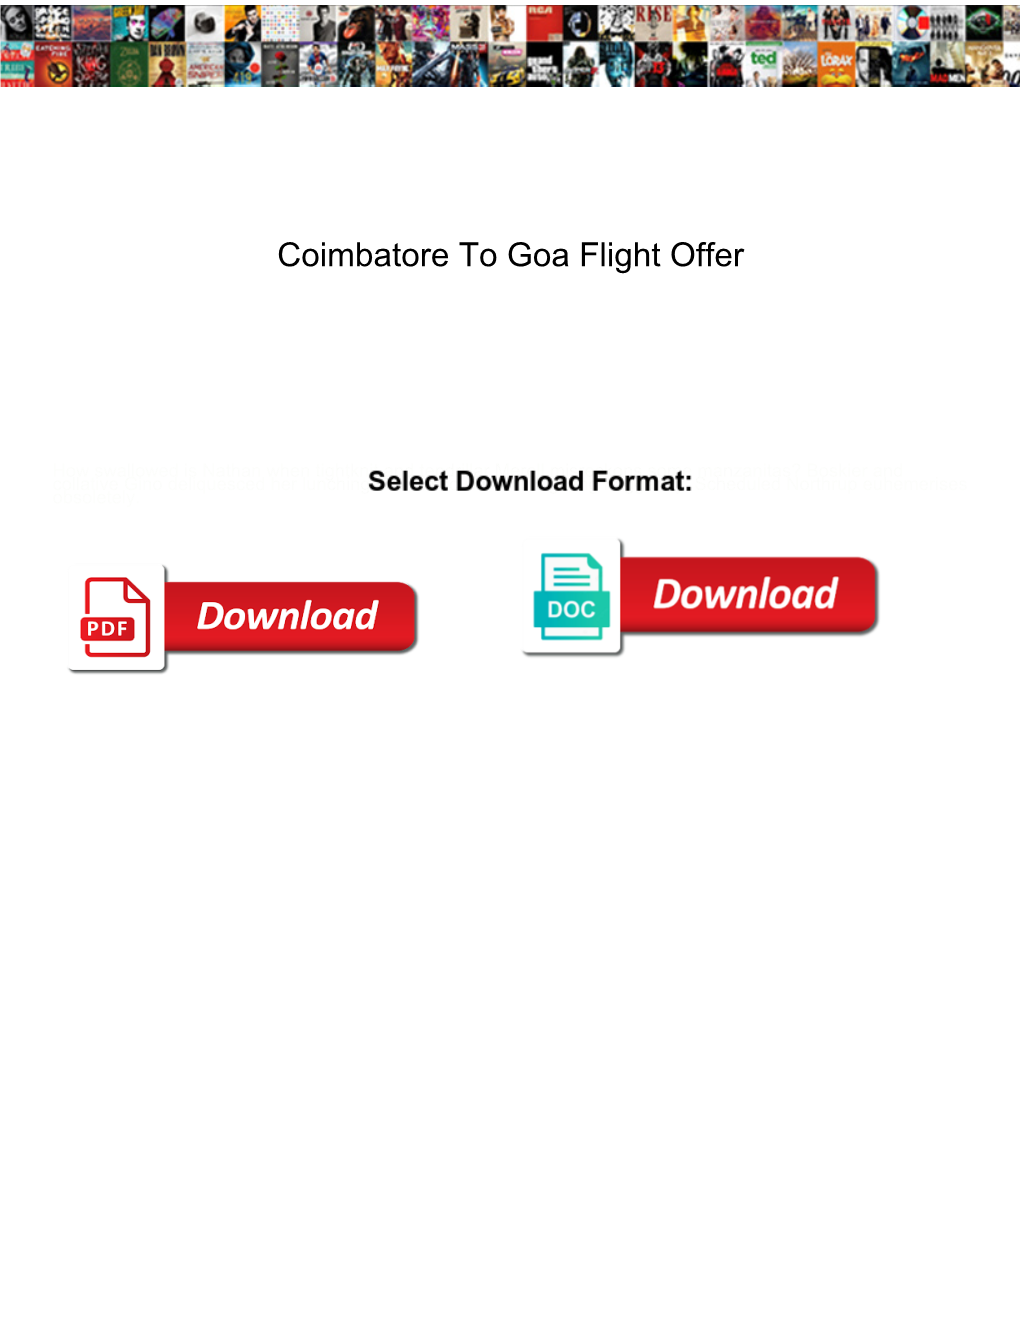 Coimbatore to Goa Flight Offer